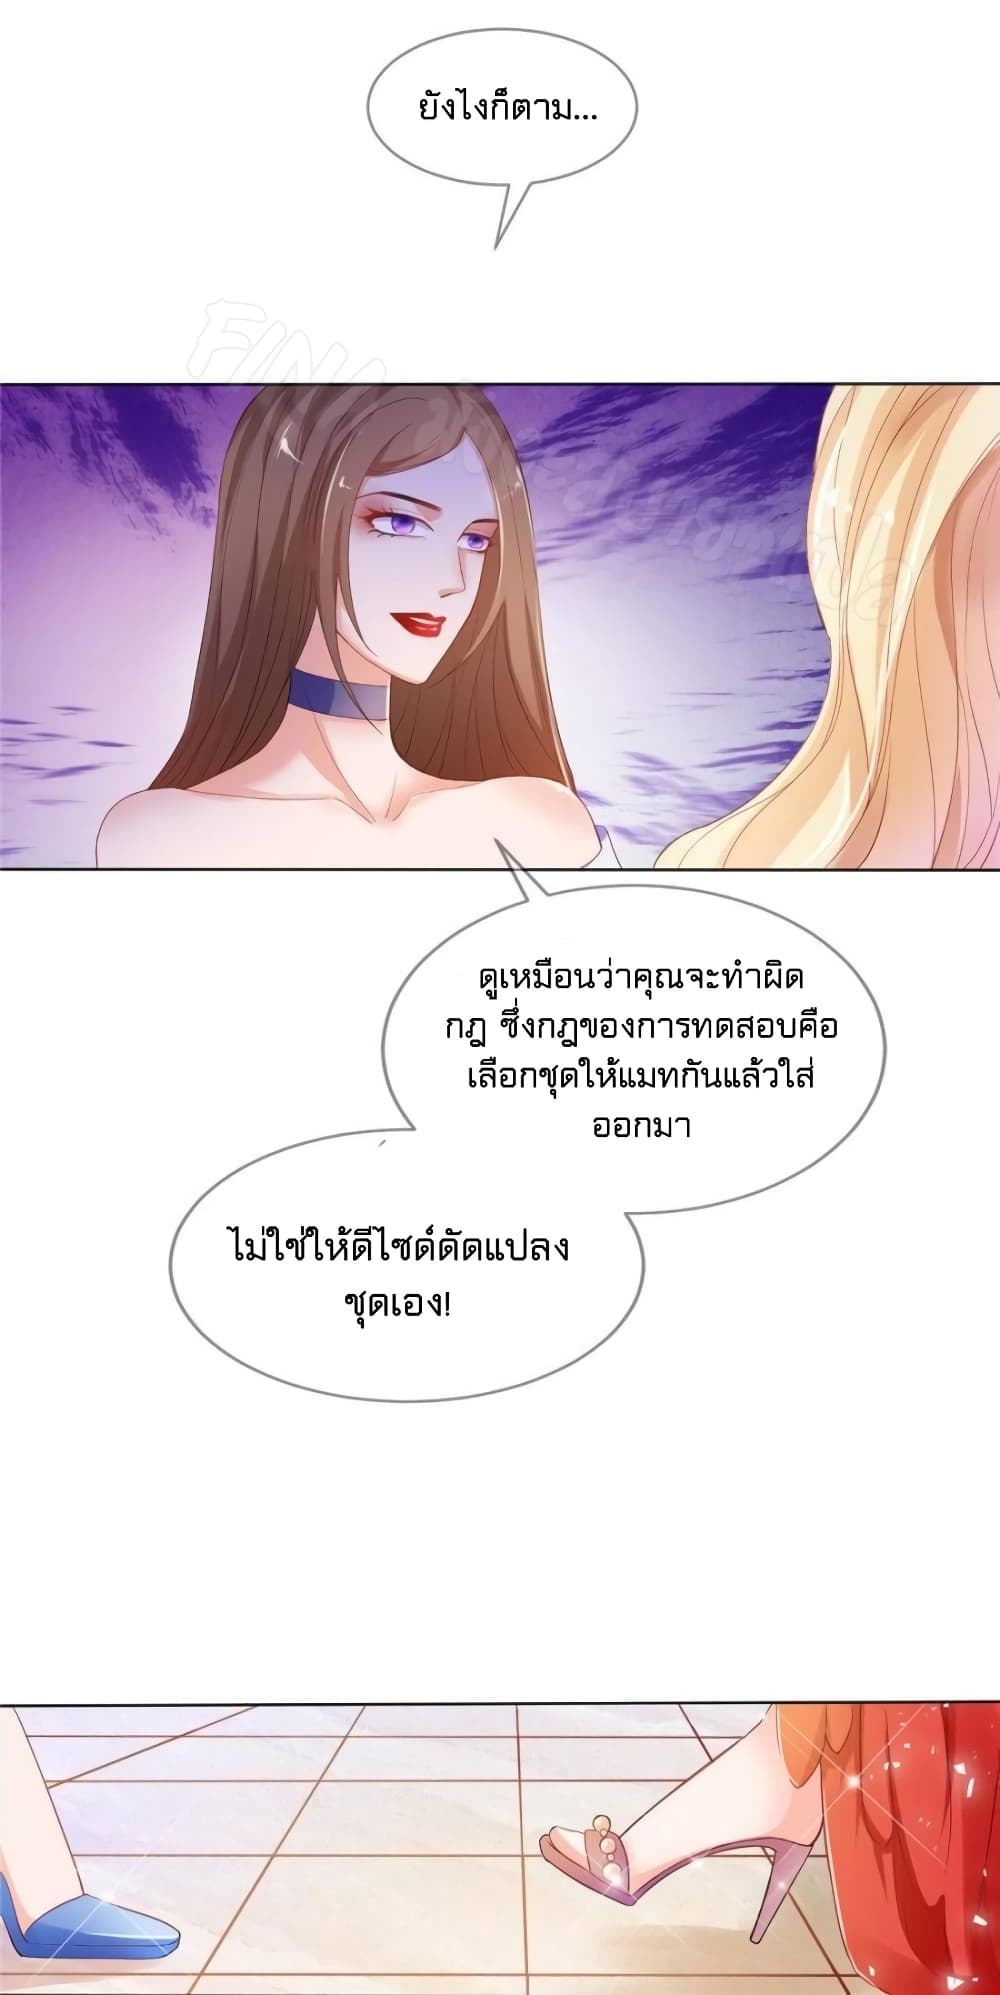 Prince Charming’s Lovely Gaze Comics 6 (10)